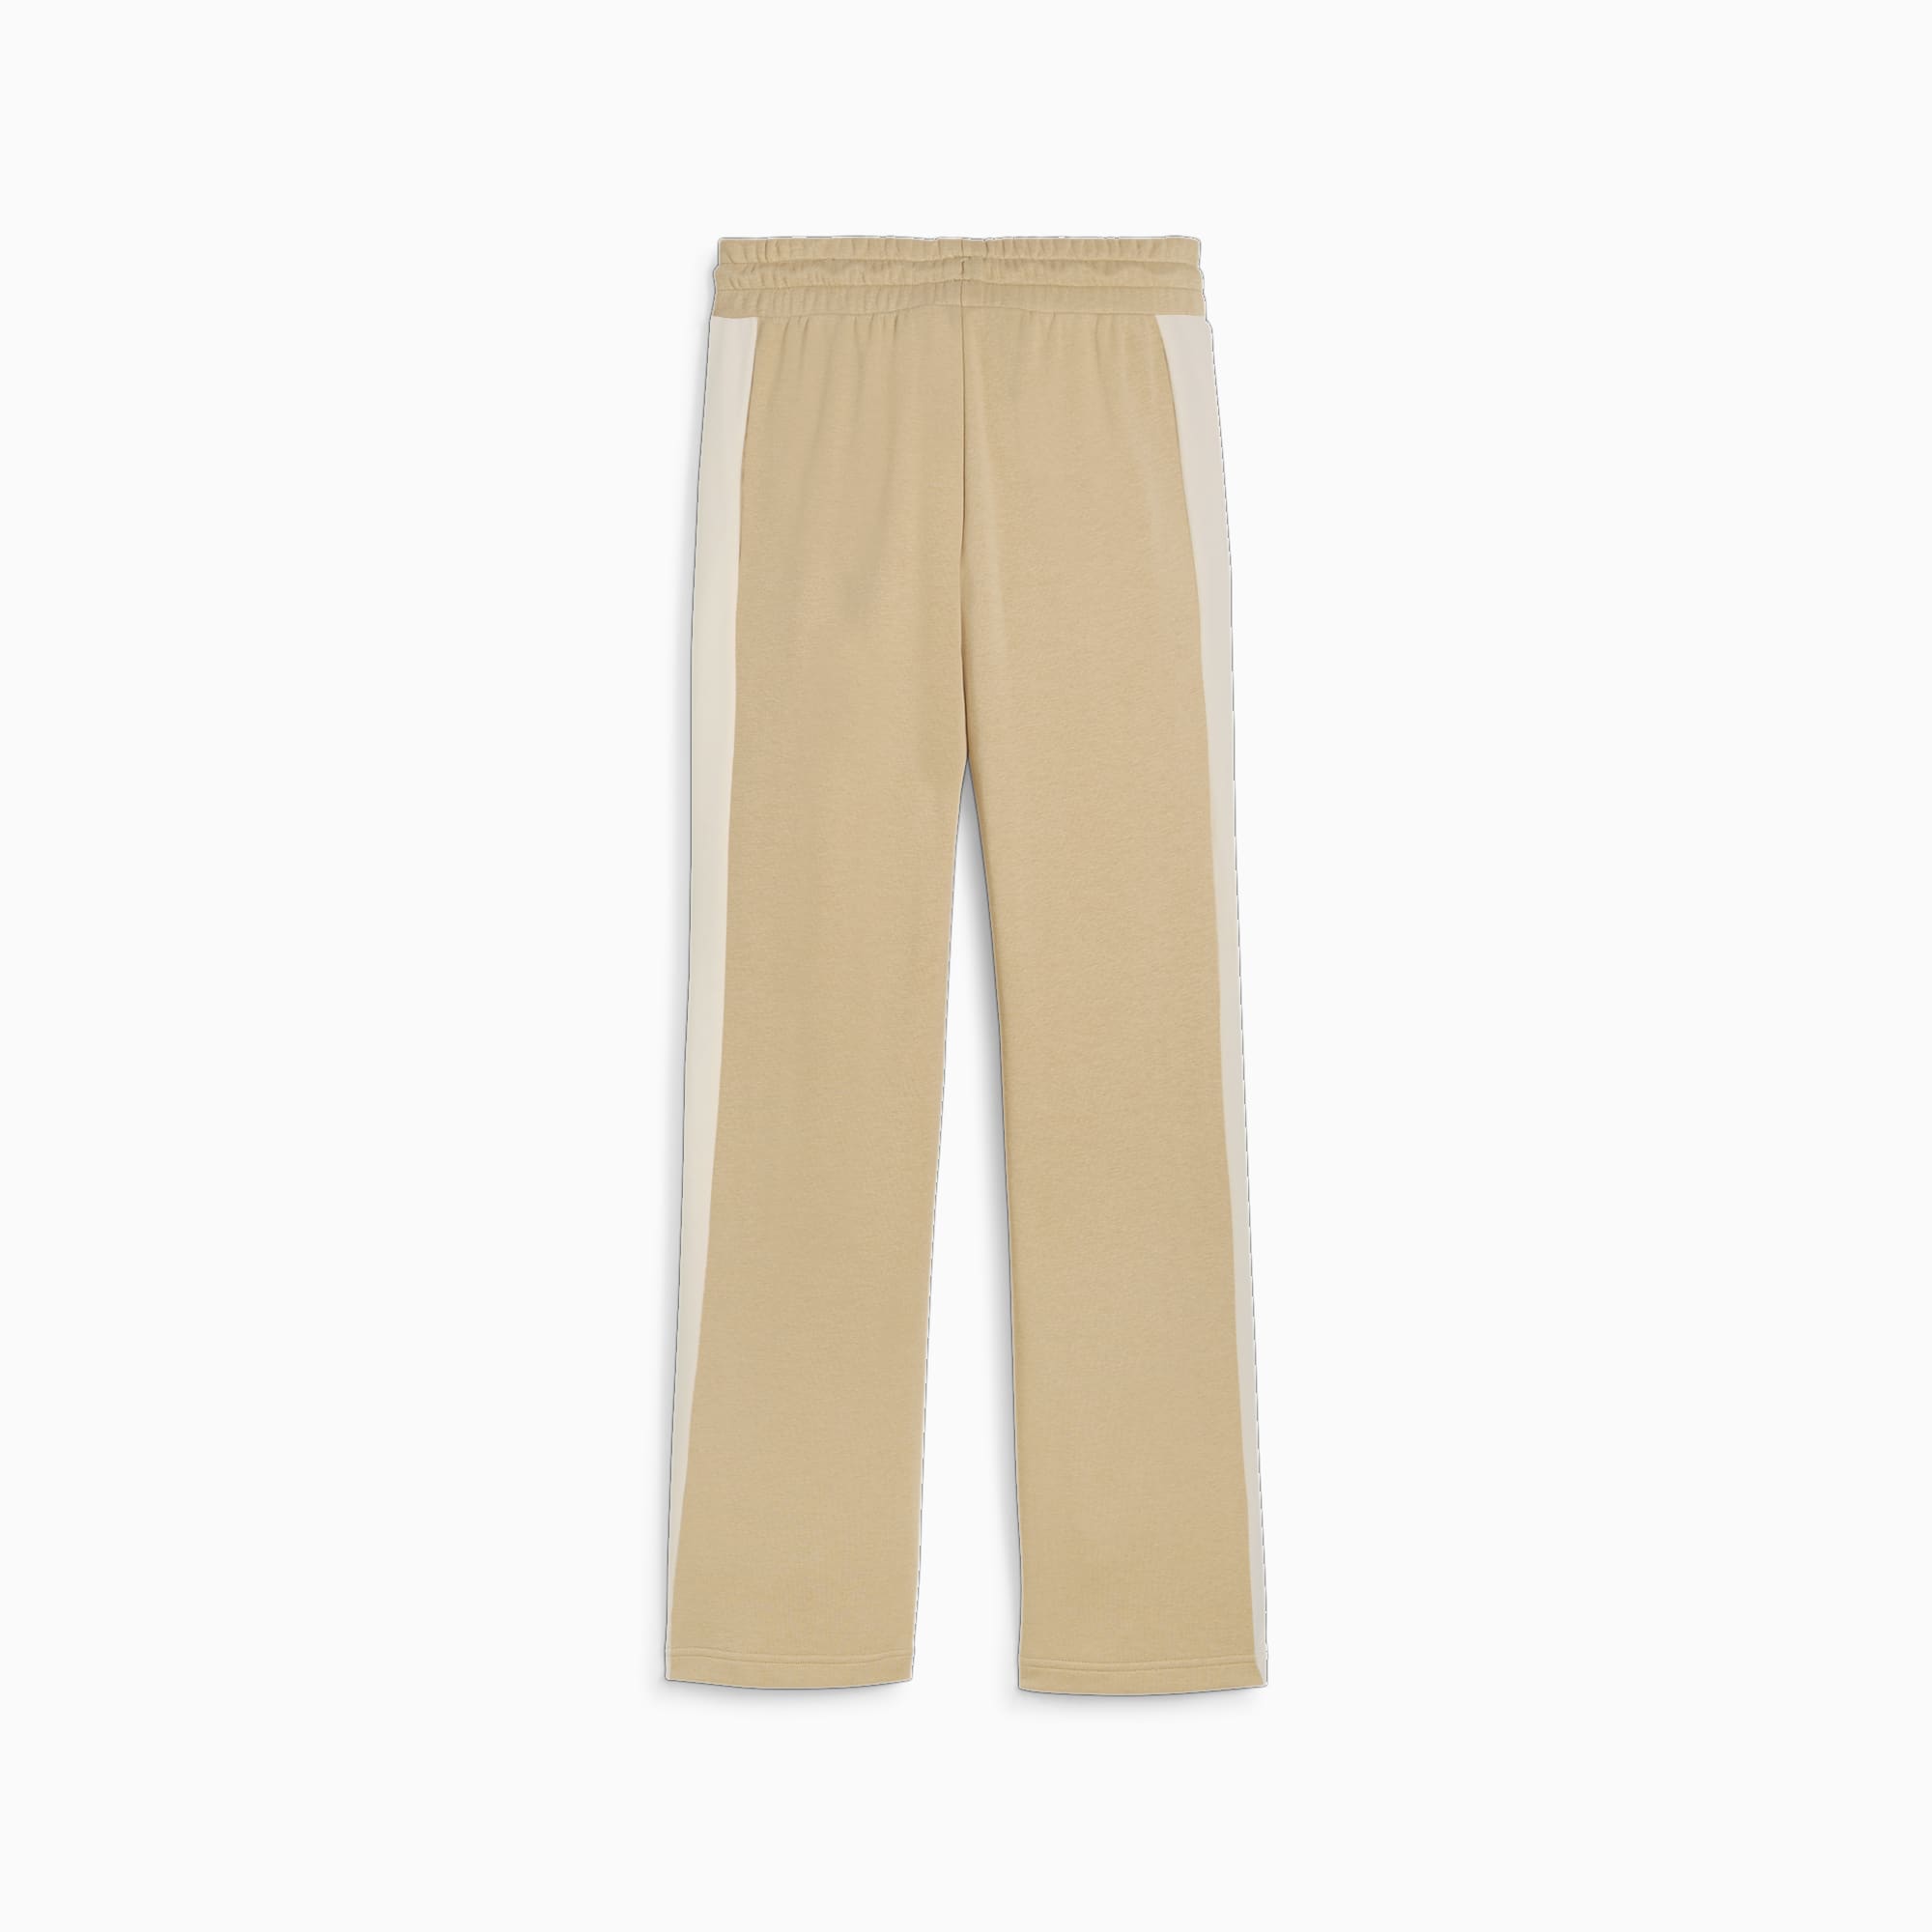 PUMA Iconic T7 Women's Straight Pants, Prairie Tan, Size S, Clothing